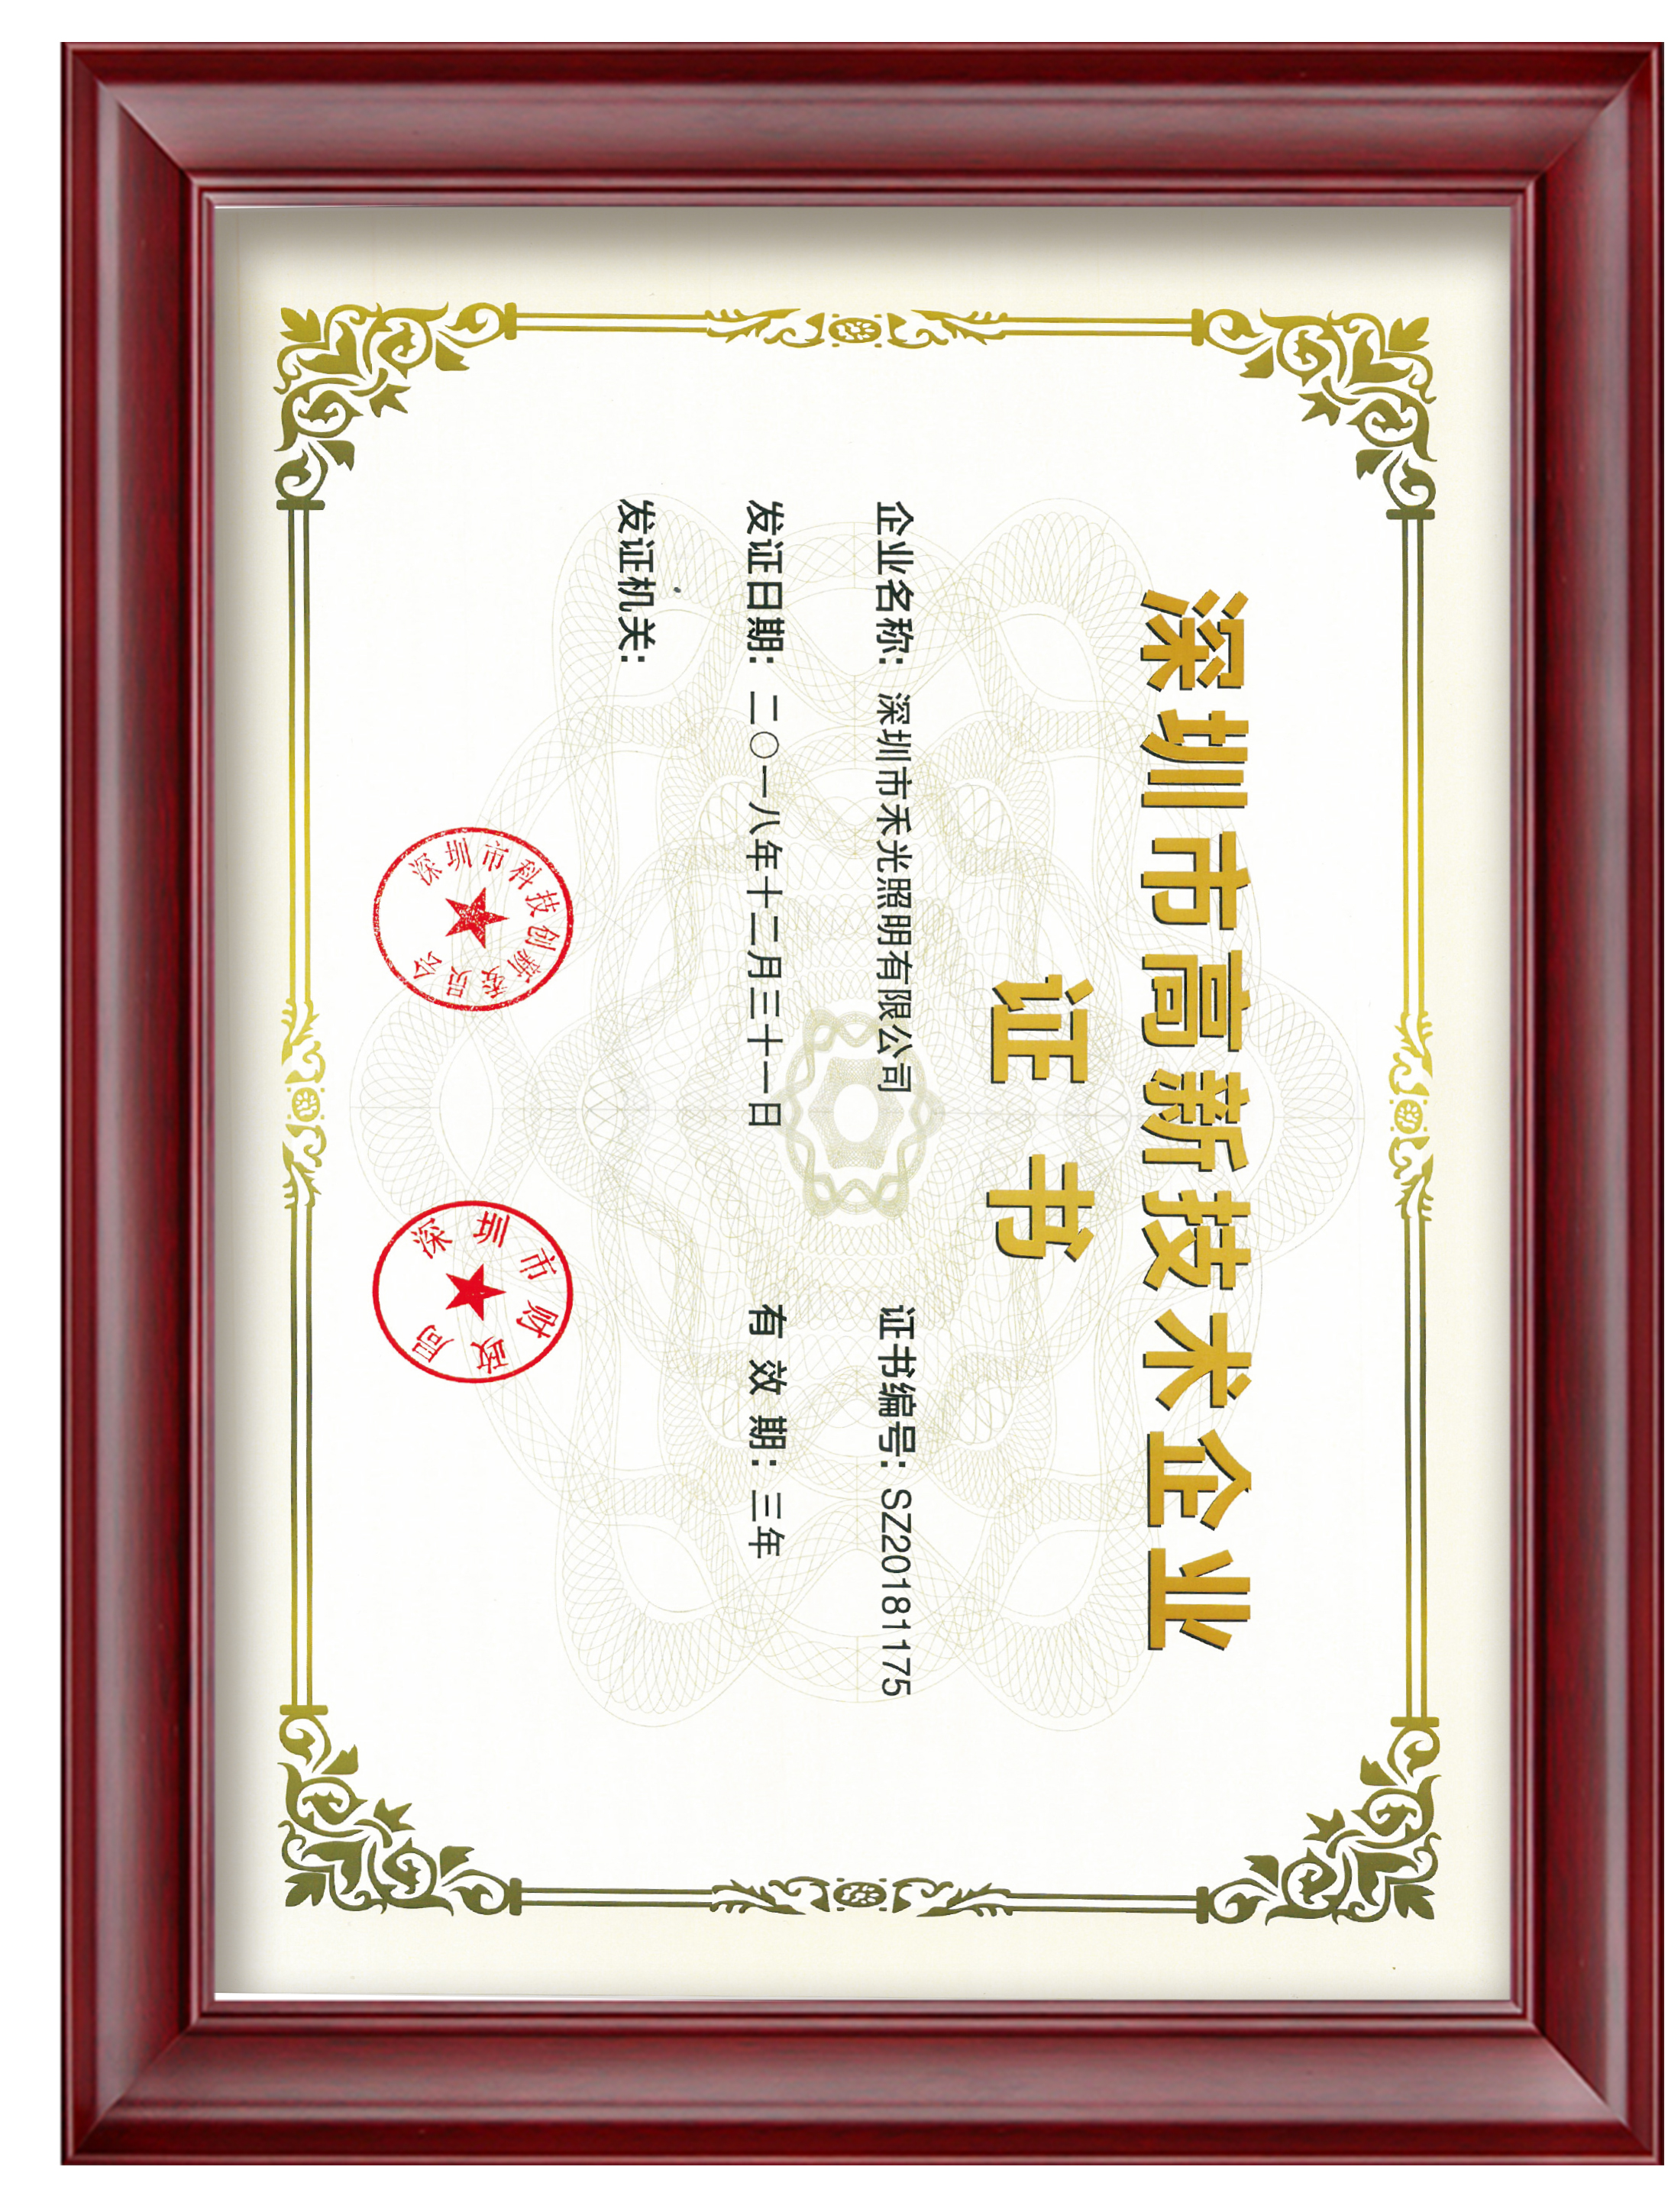 12.Shenzhen High-Tech Enterprise Zertifikat